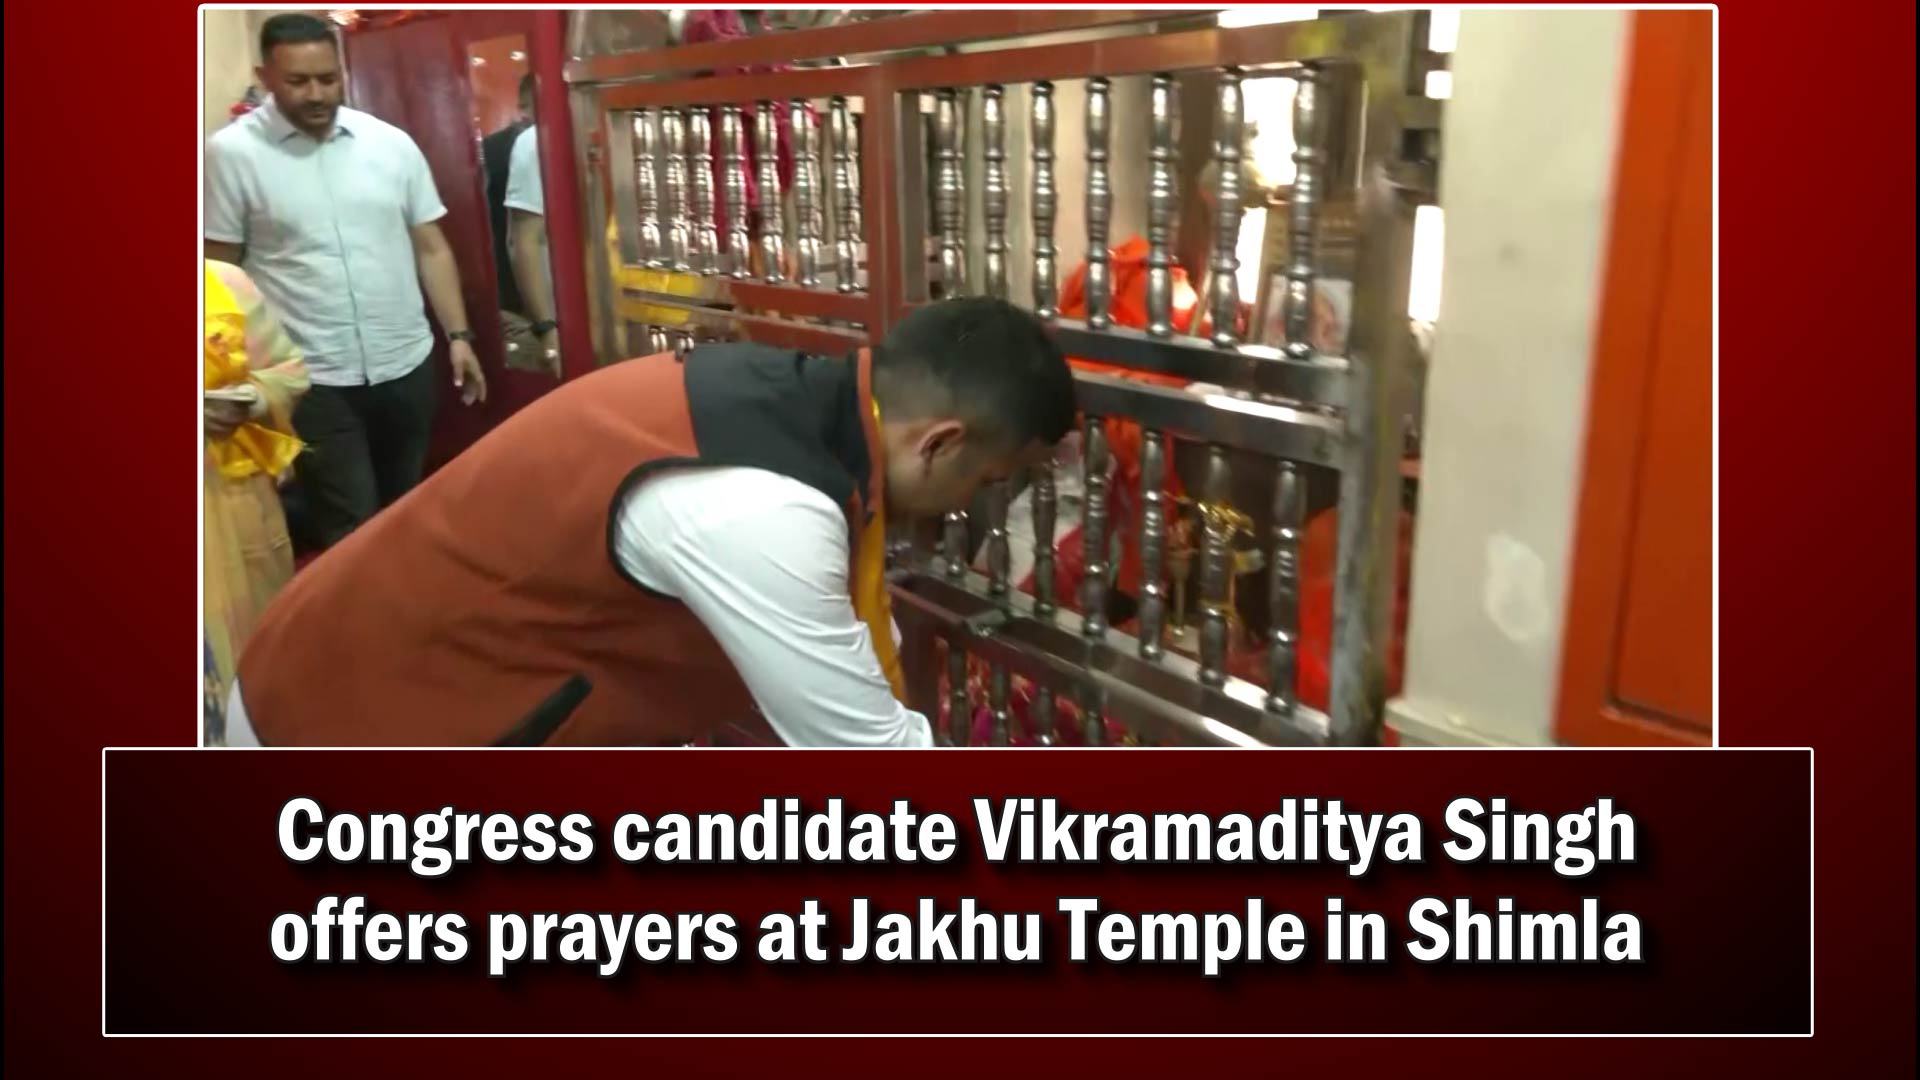 Himachal Pradesh: Congress candidate Vikramaditya Singh offers prayers at Jakhu Temple in Shimla